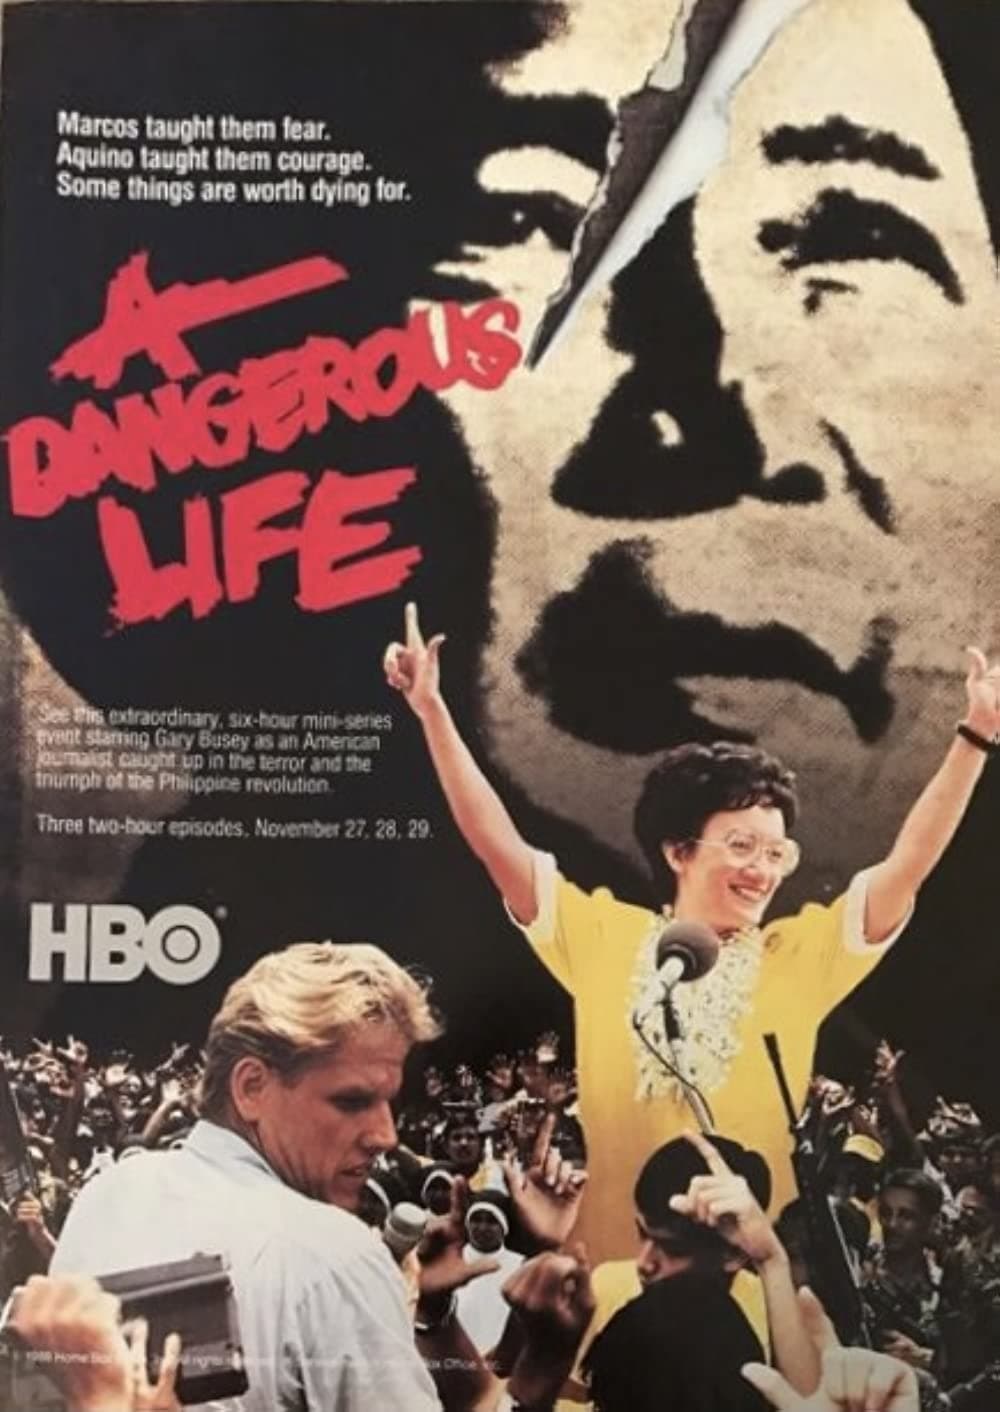 A Dangerous Life